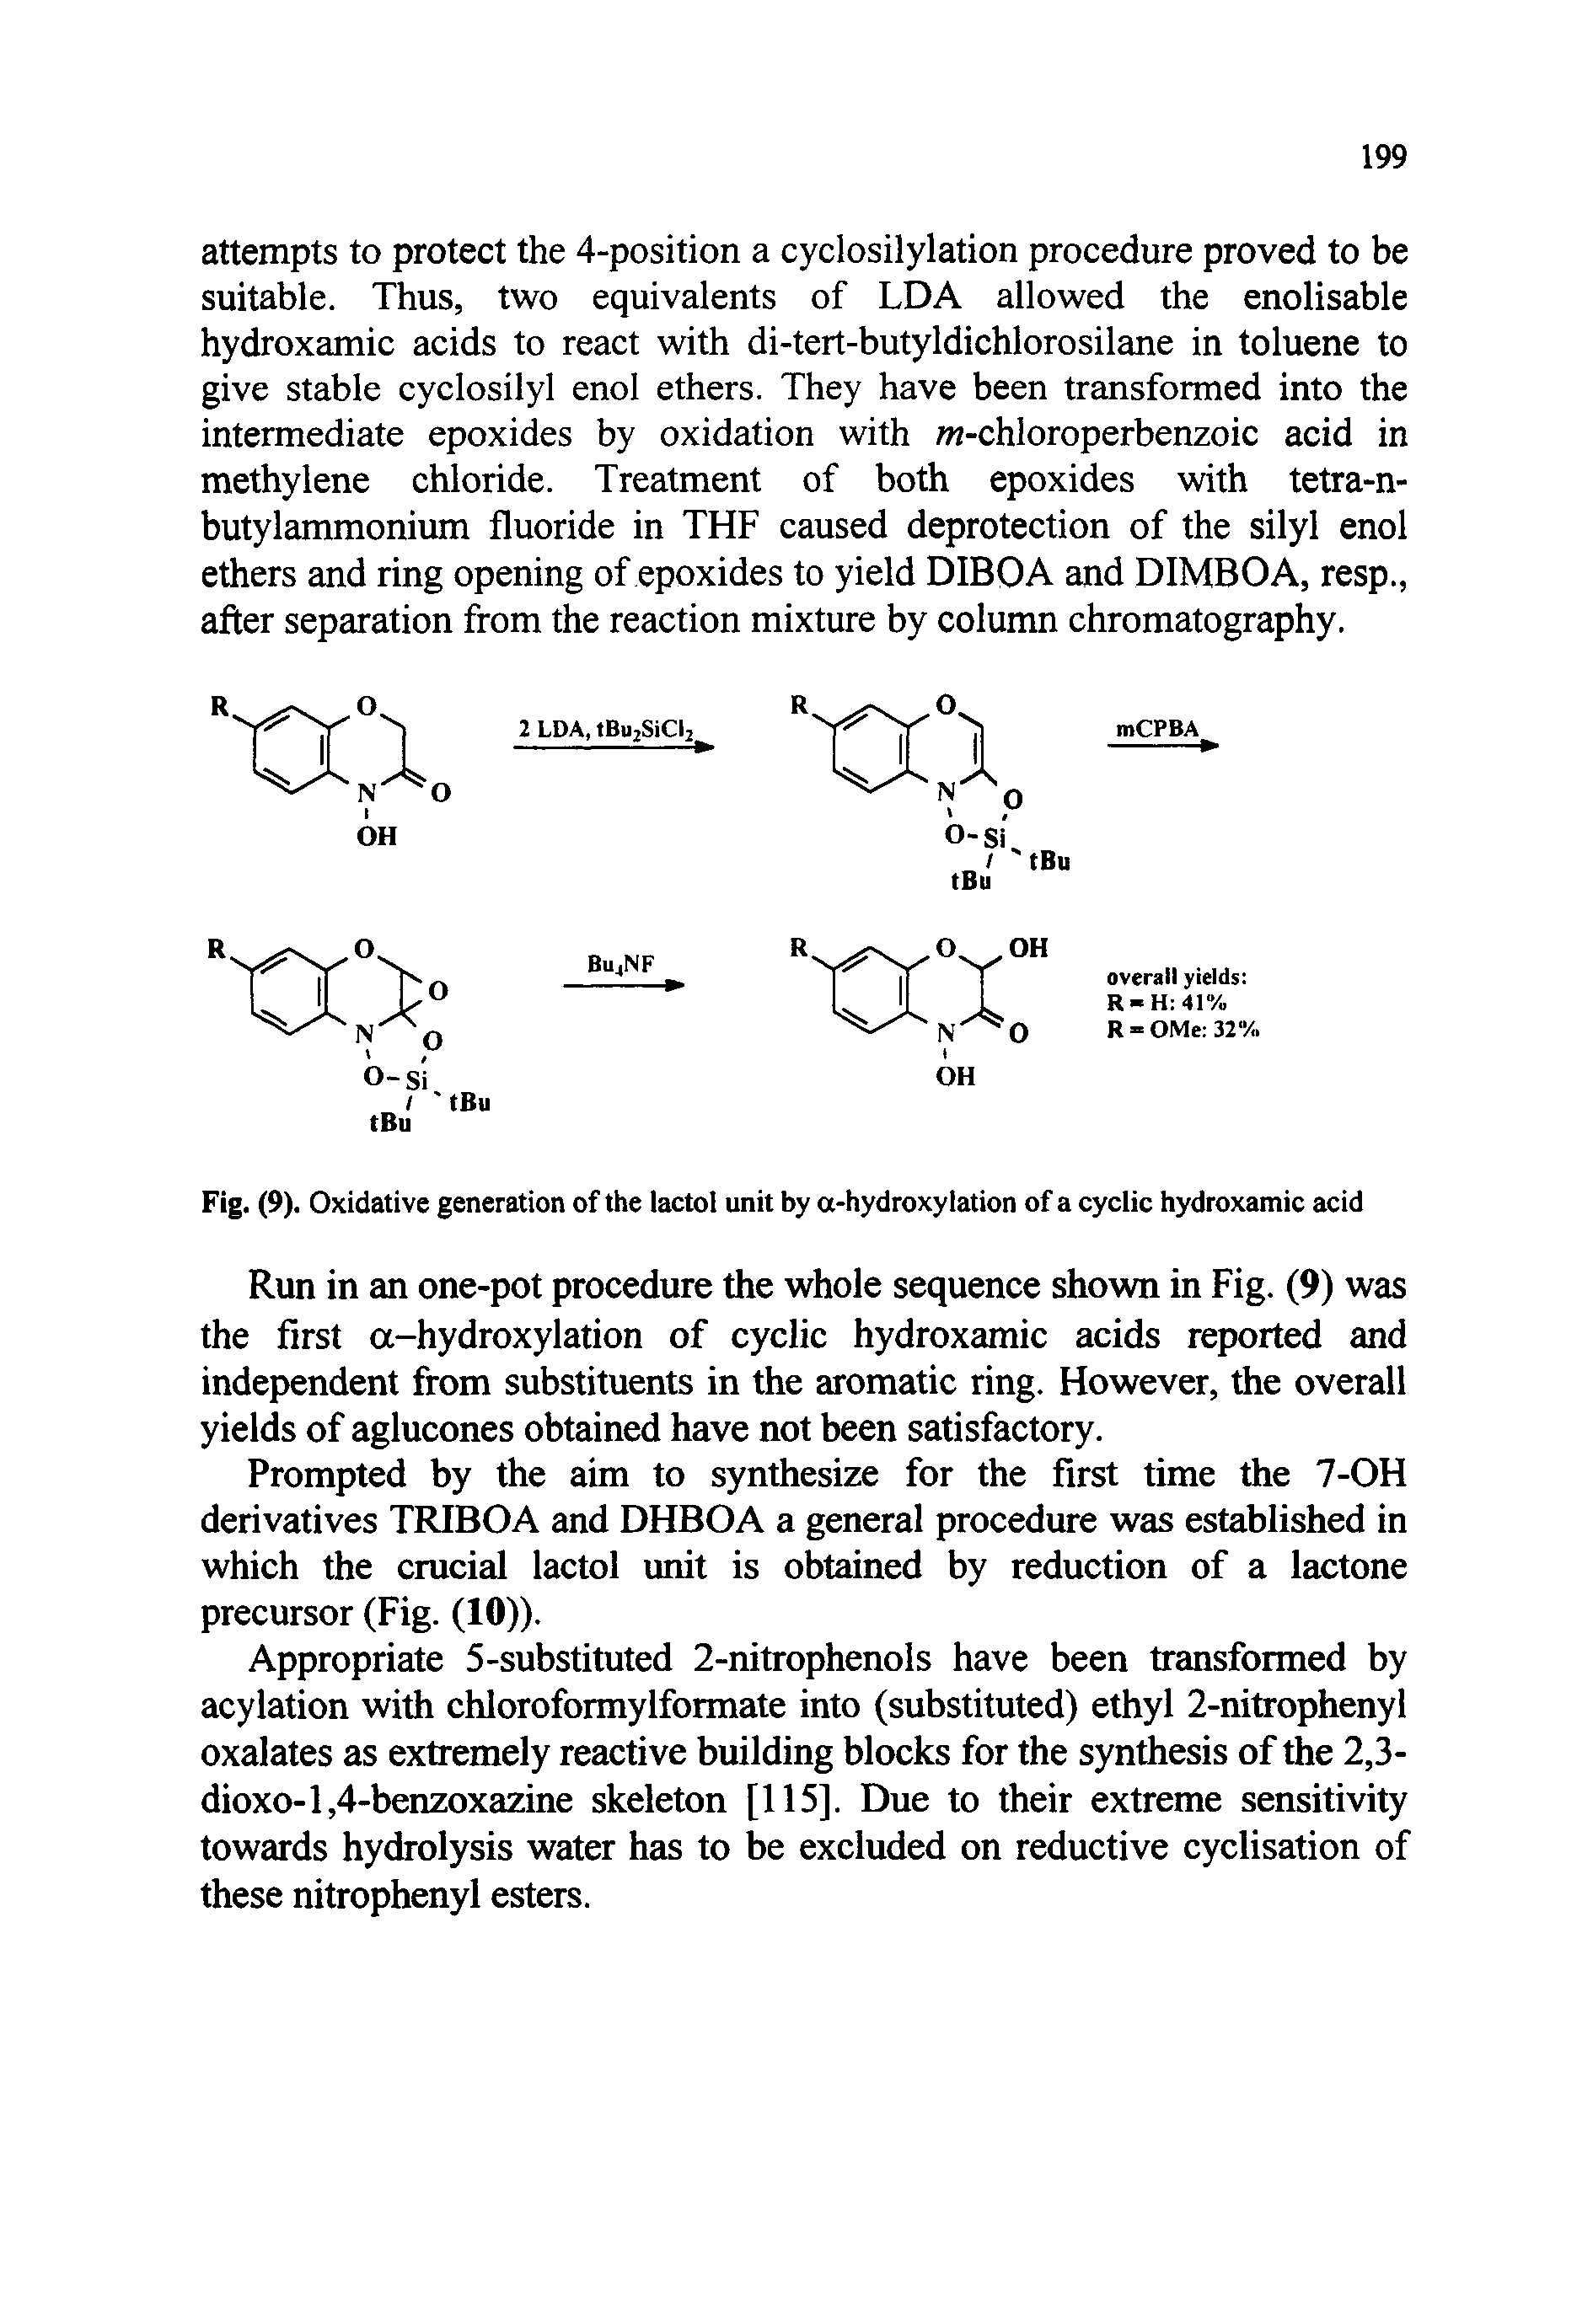 Fig. (9). Oxidative generation of the lactol unit by a-hydroxylation of a cyclic hydroxamic acid...